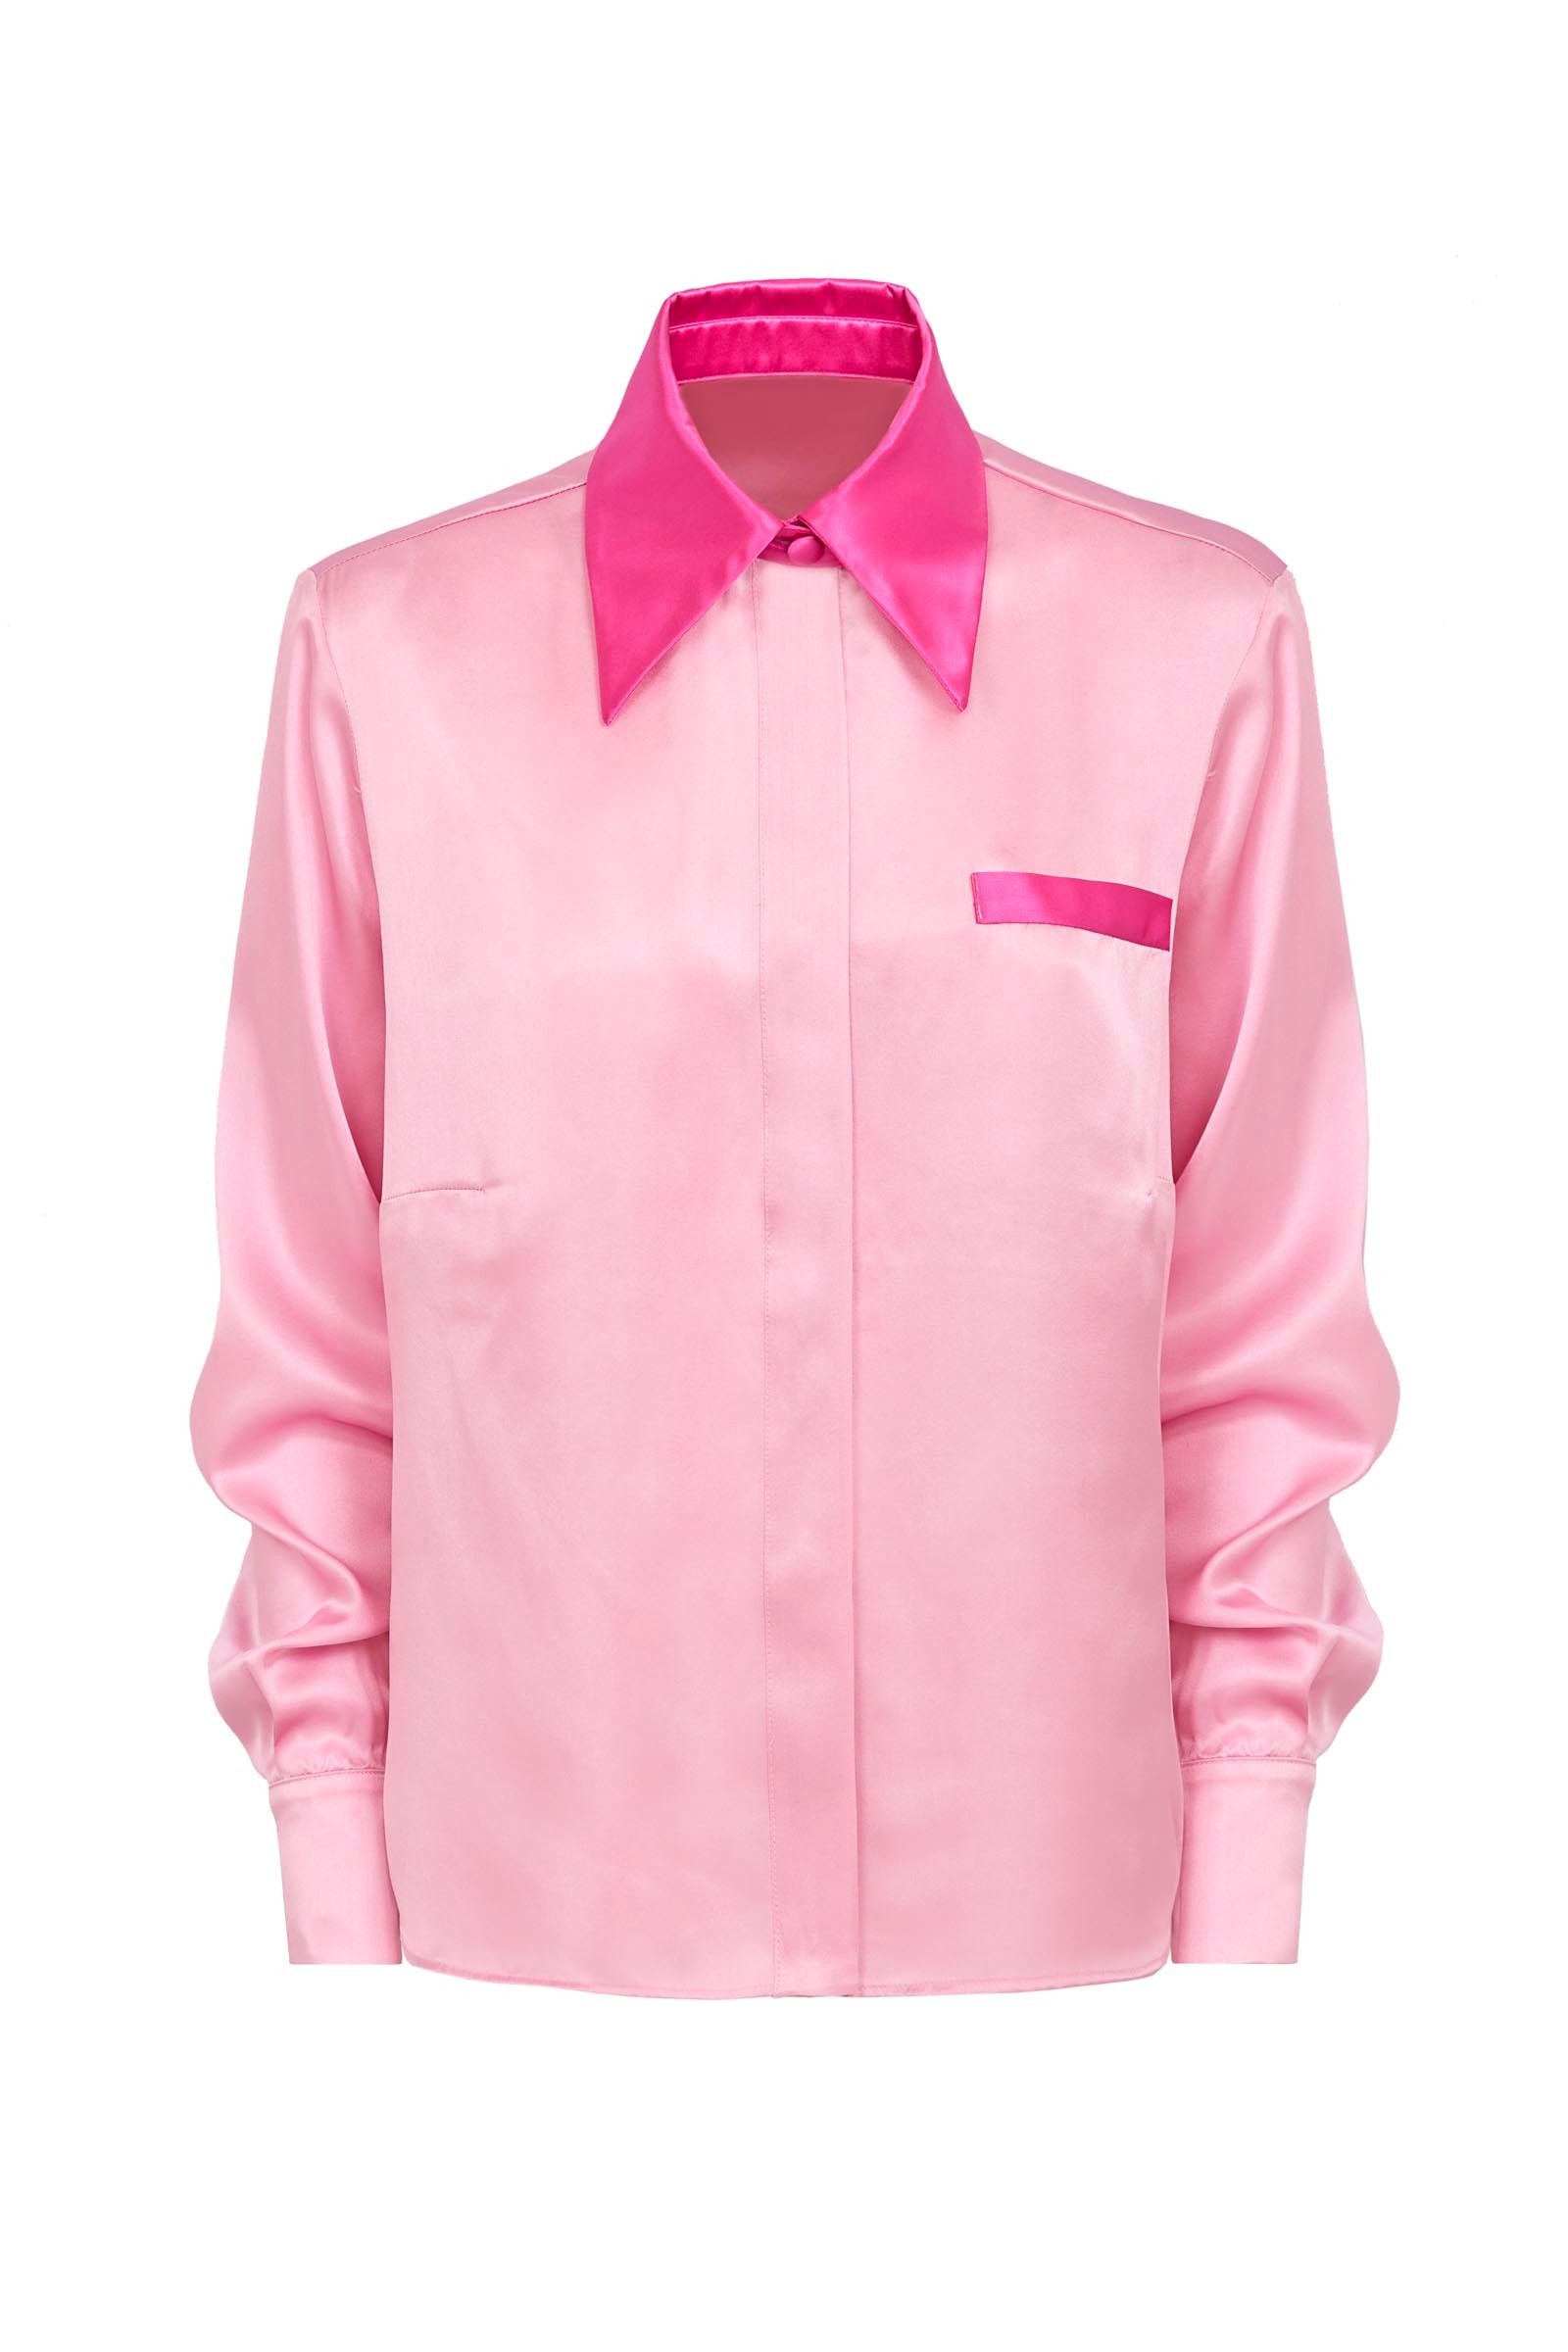 The Pink & Fuchsia Silk Blouse